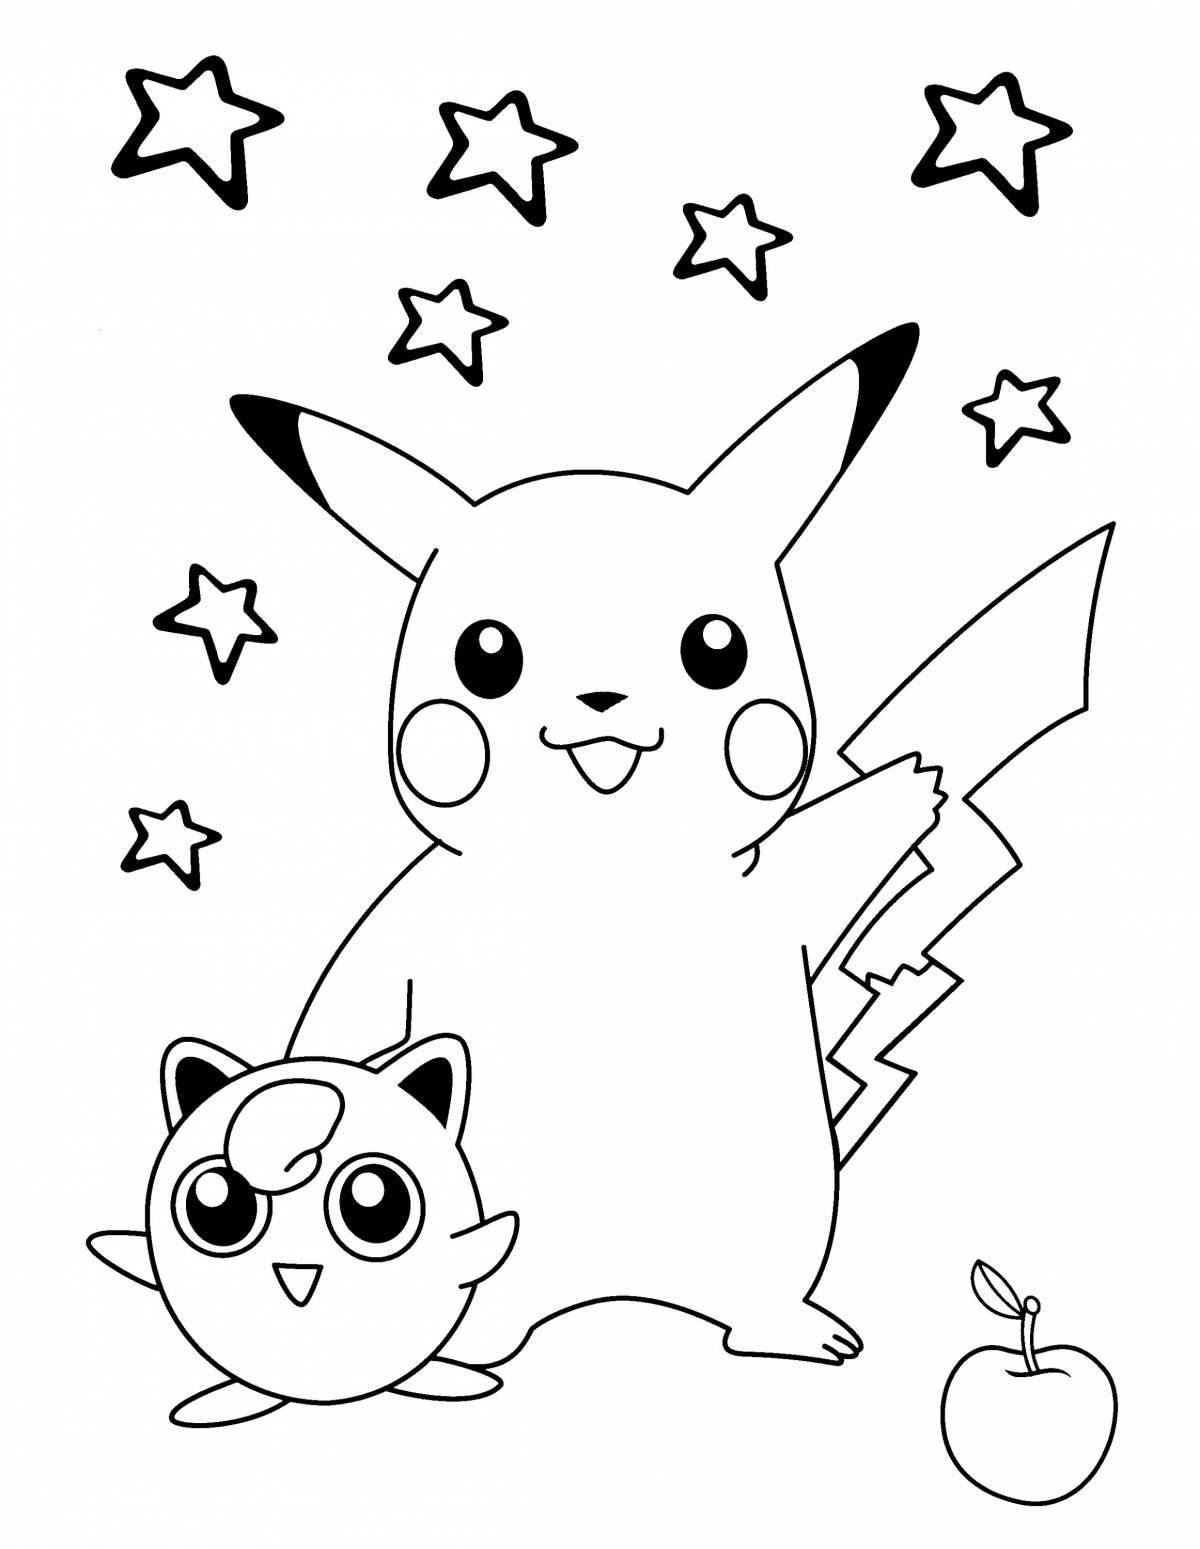 Incredible pikachu seal coloring page